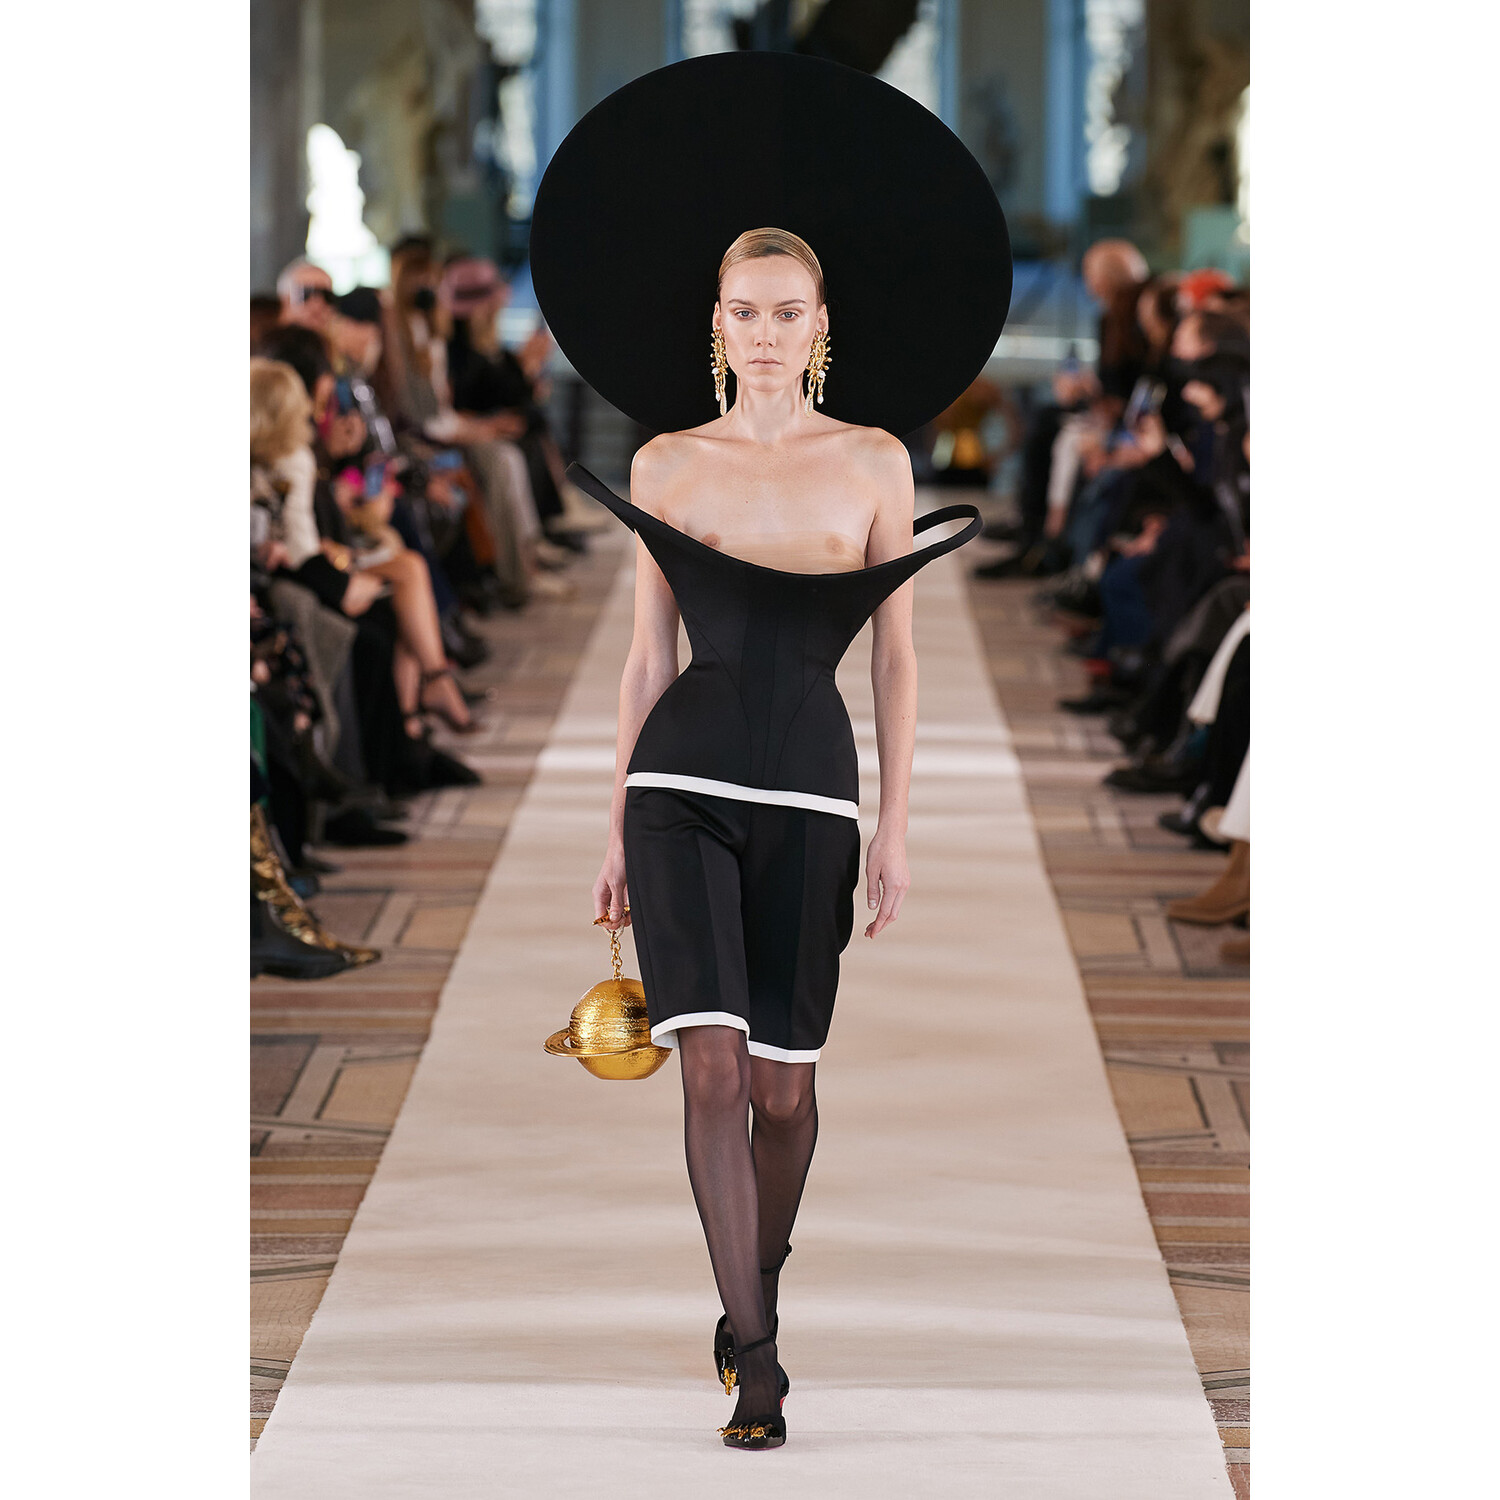 Фото Schiaparelli Couture Spring 2022 Collection / Schiaparelli Couture весна-лето 2022